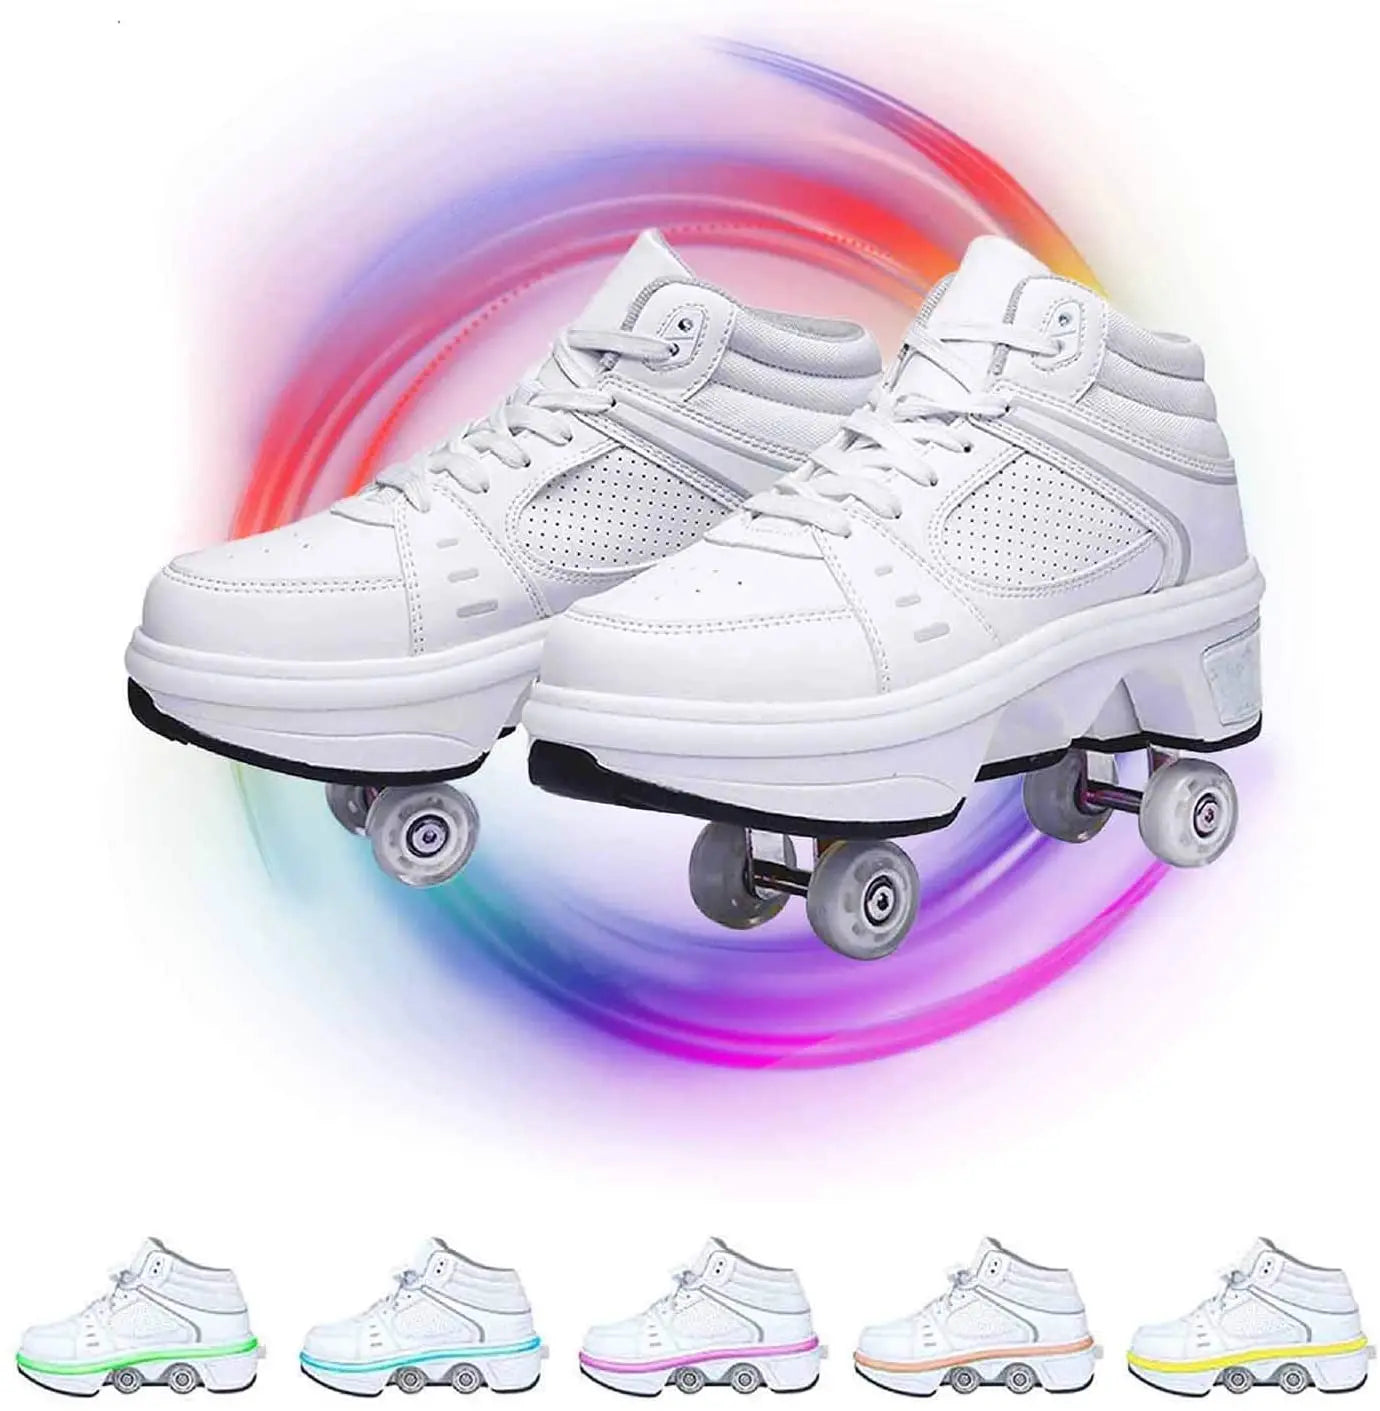 2-in-1 Deformation Roller Skates: Comfy Shoes with Hidden Wheels